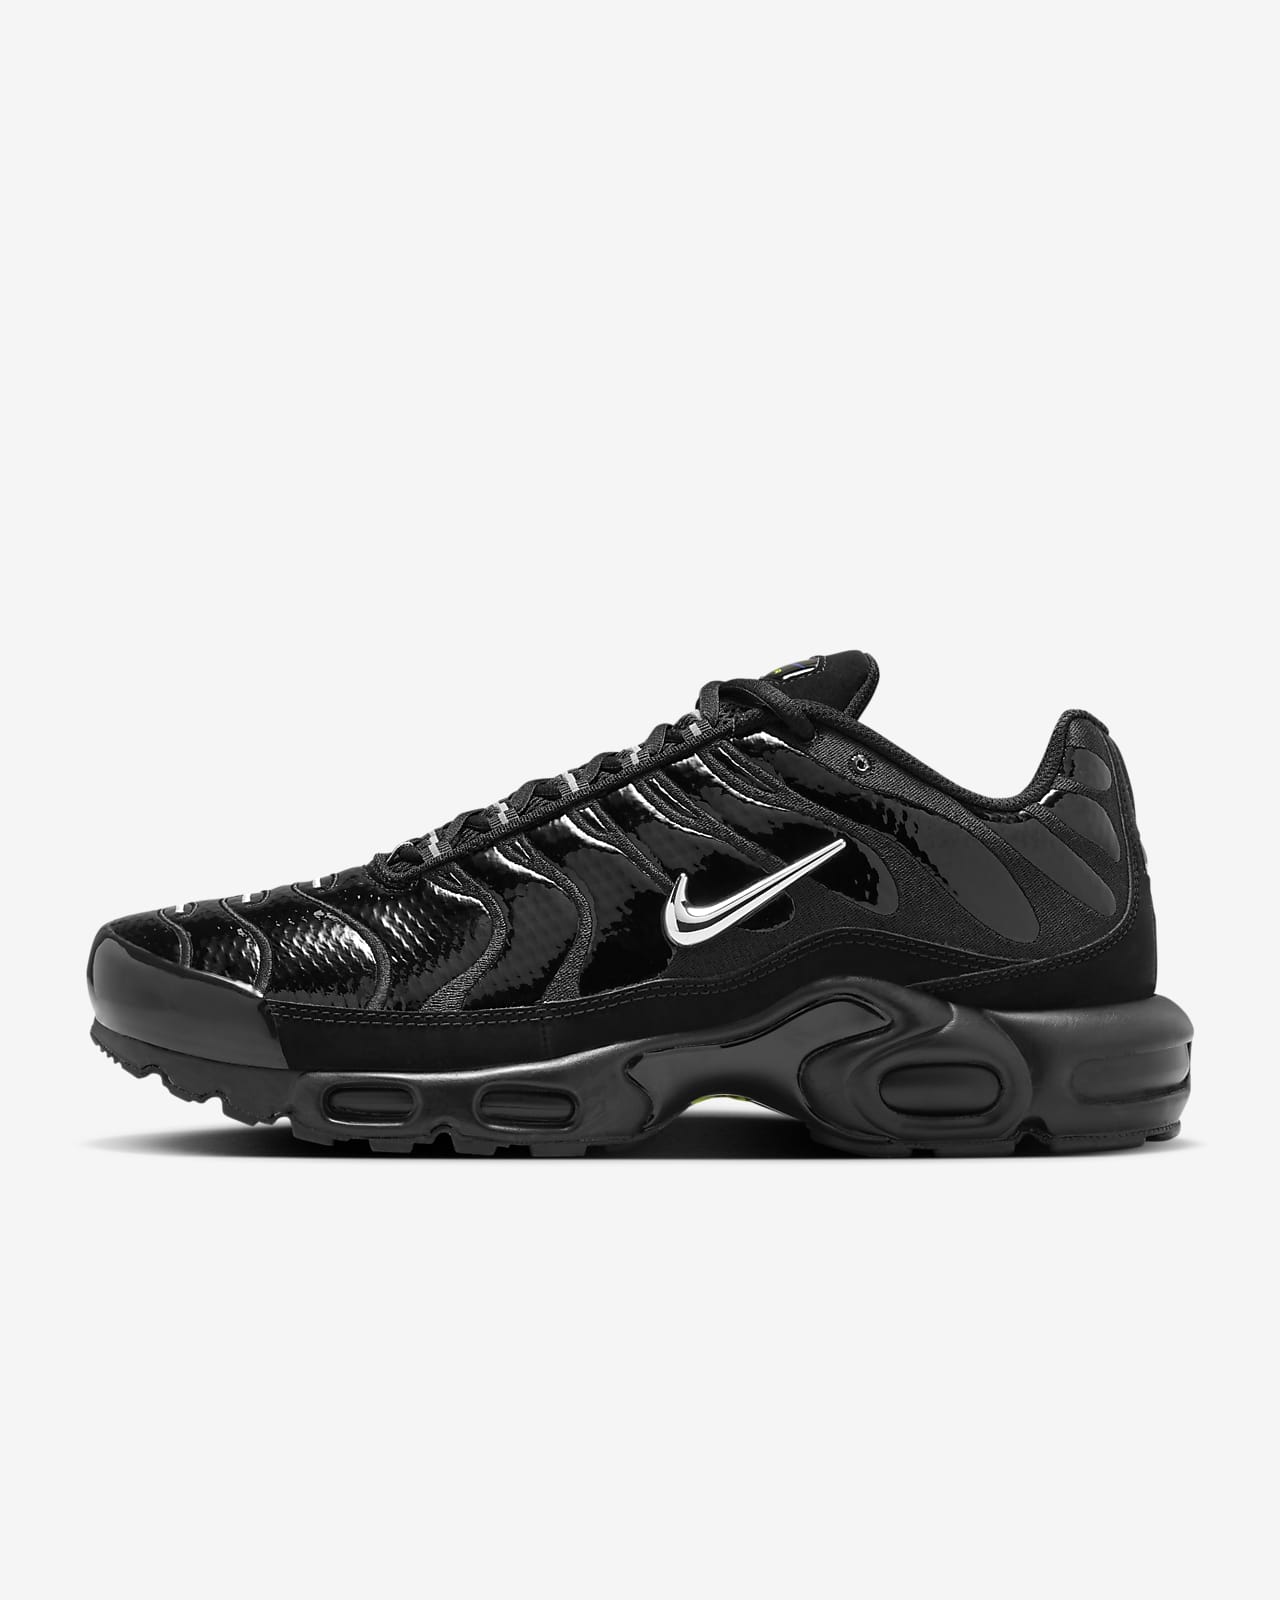 Nike Air Force 1 Custom Low Drip Splatter White Black Shoes Men Women Kids  | eBay